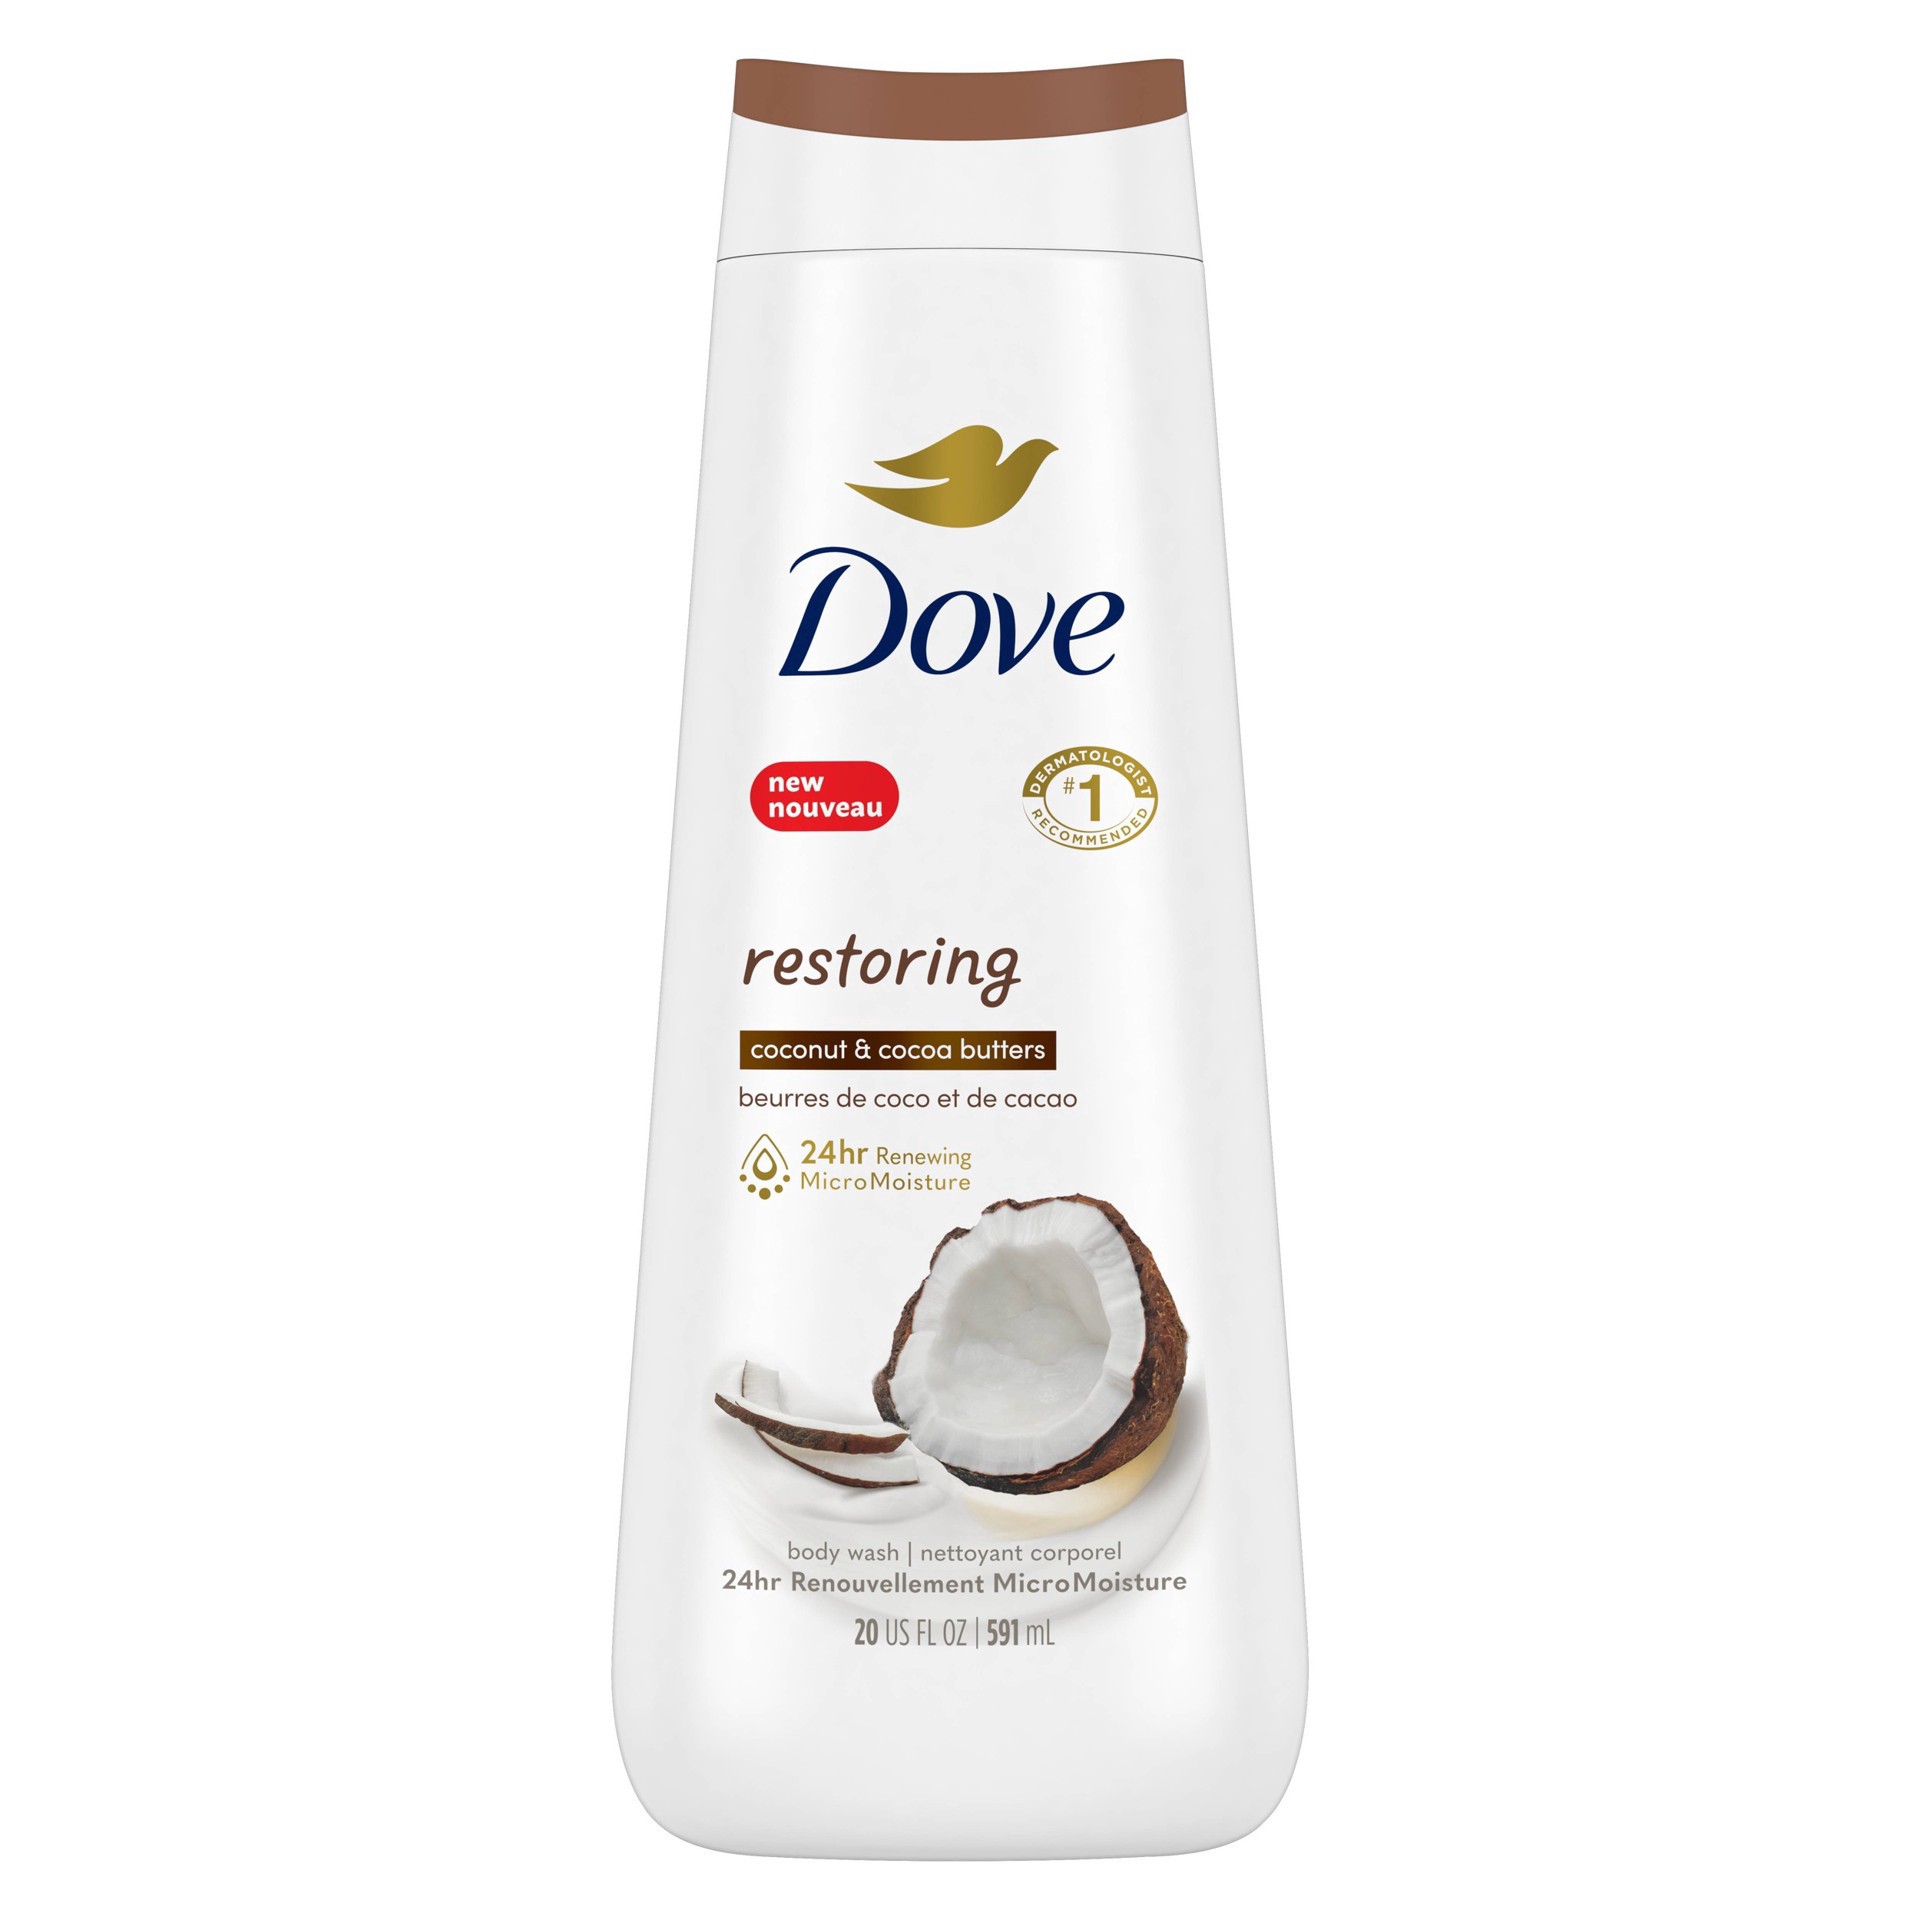 slide 11 of 91, Dove Bc Restoring Coconut Butter & Cocoa Butter Bodywash, 20 fl oz